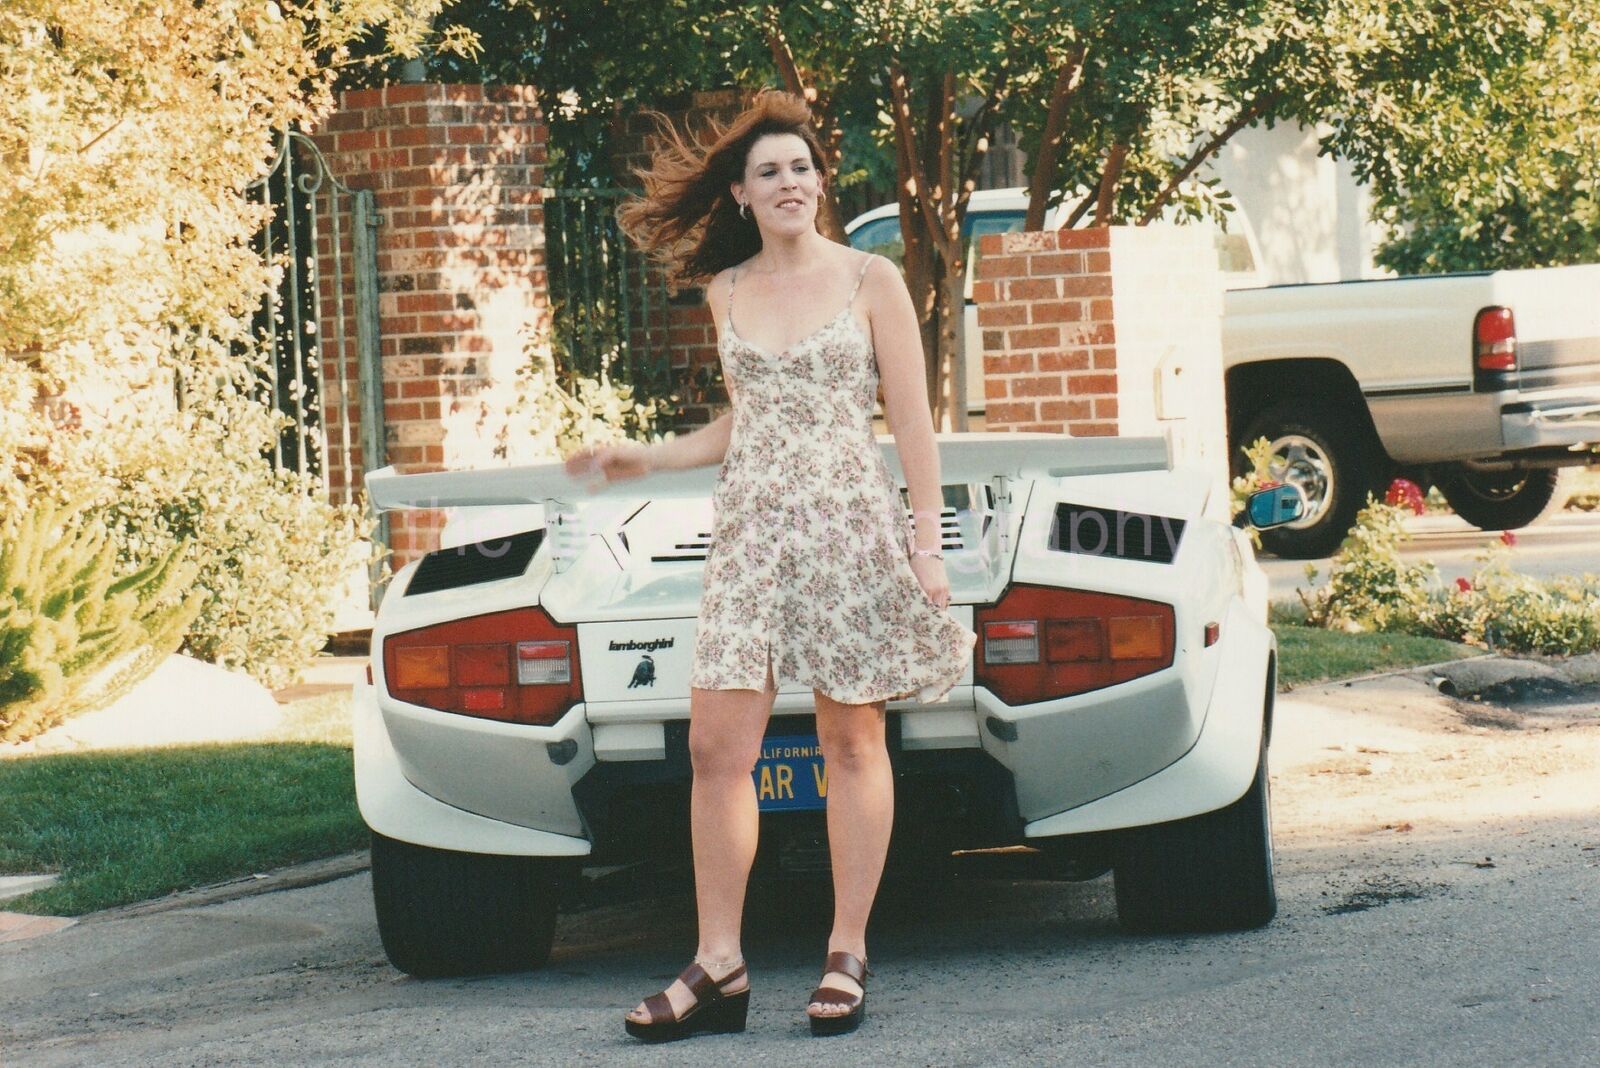 Lamborghini Girl FOUND Photo Poster painting Color CLASSIC CAR Original Snapshot REDHEAD 97 5